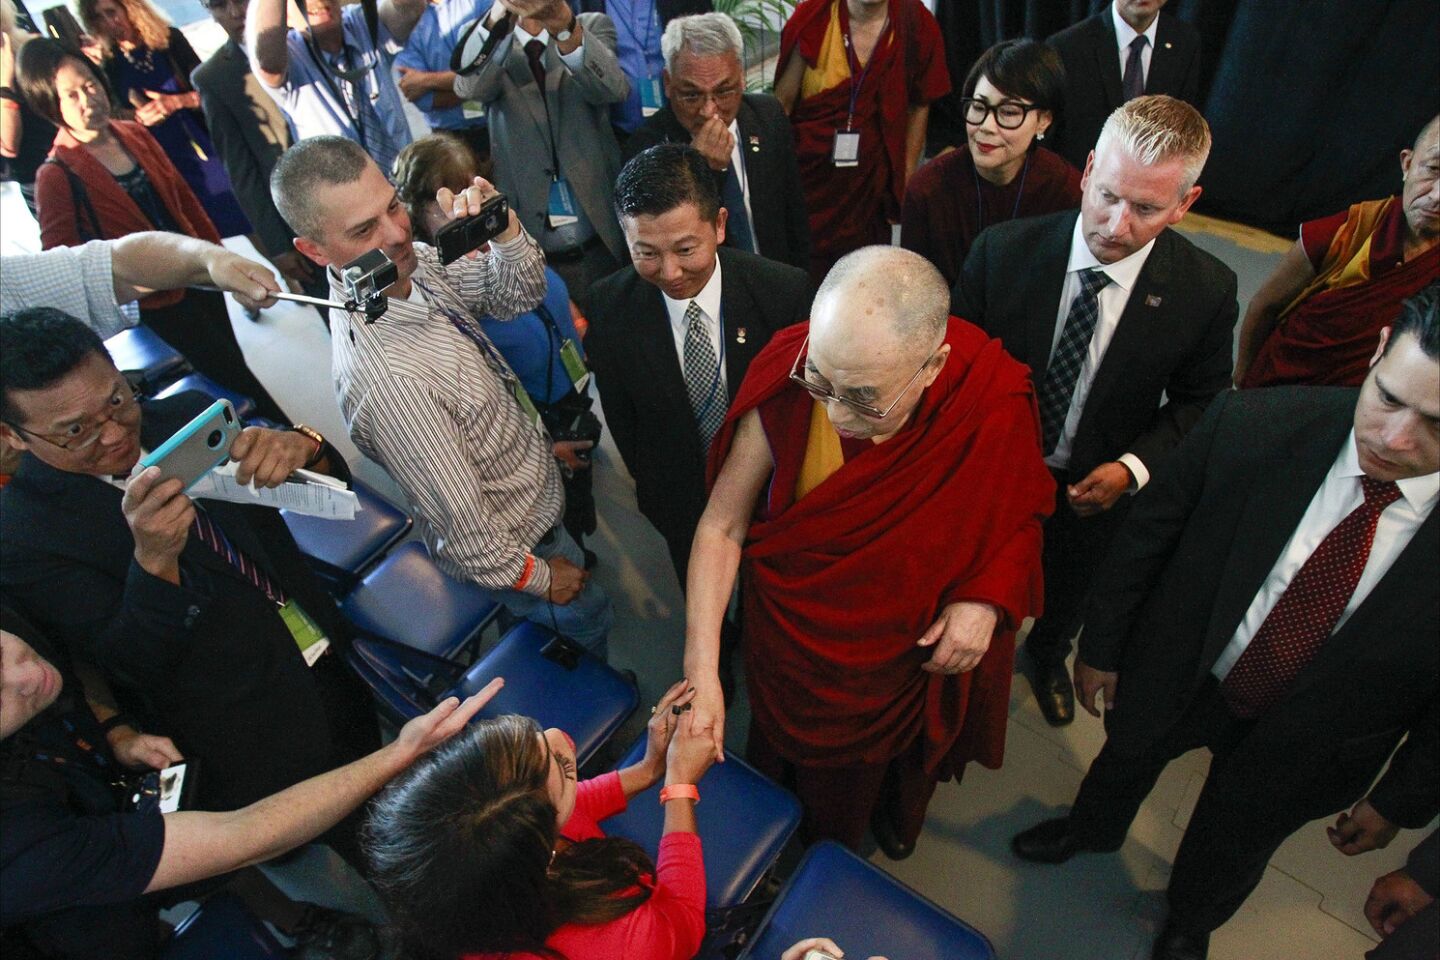 Dalai Lama at UC San Diego